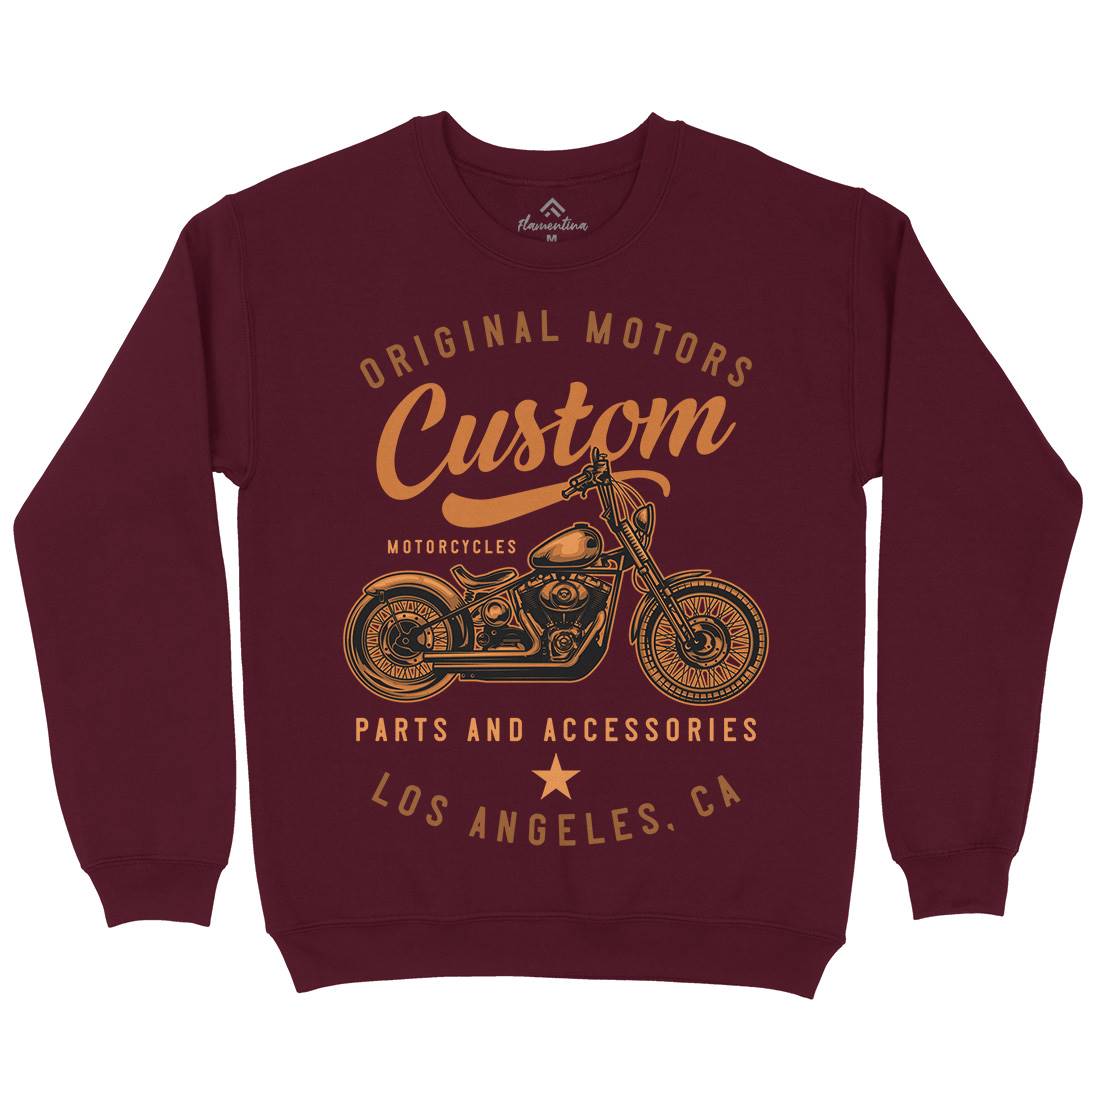 Los Angeles Kids Crew Neck Sweatshirt Motorcycles B147